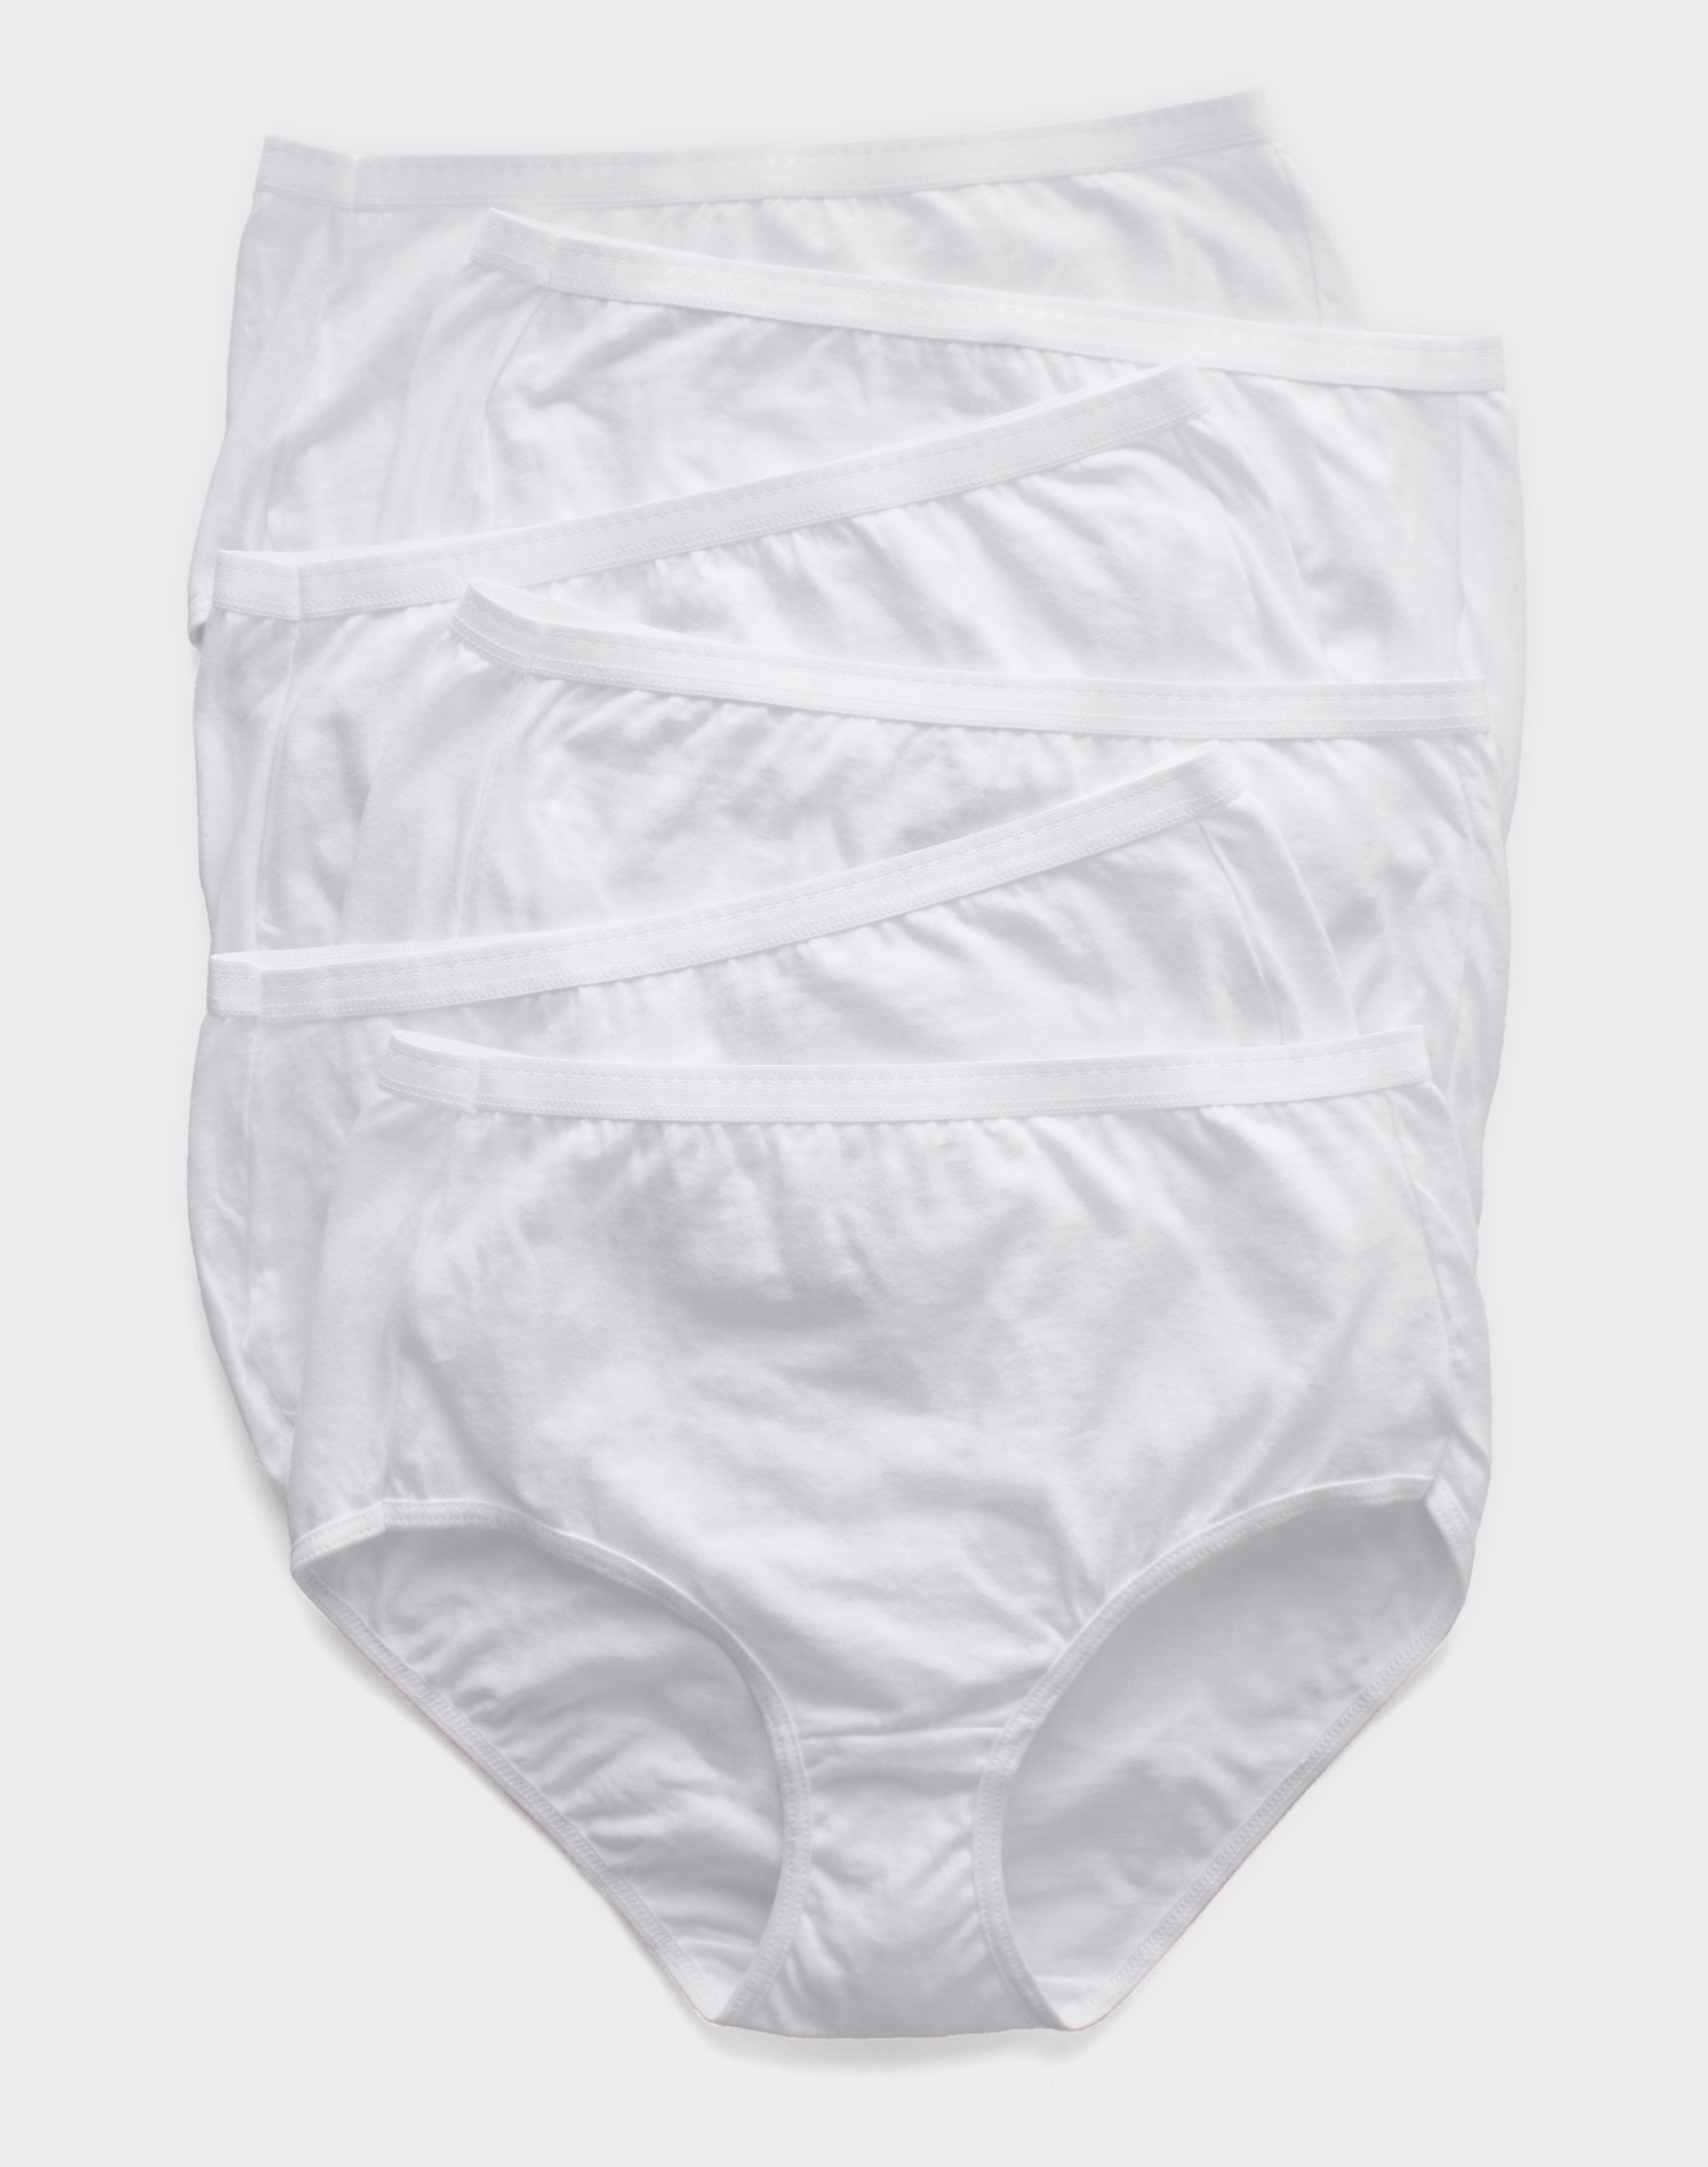 Hanes, Intimates & Sleepwear, Hanes Womens White 6 Pack Nylon Tagless  Briefs Size 9